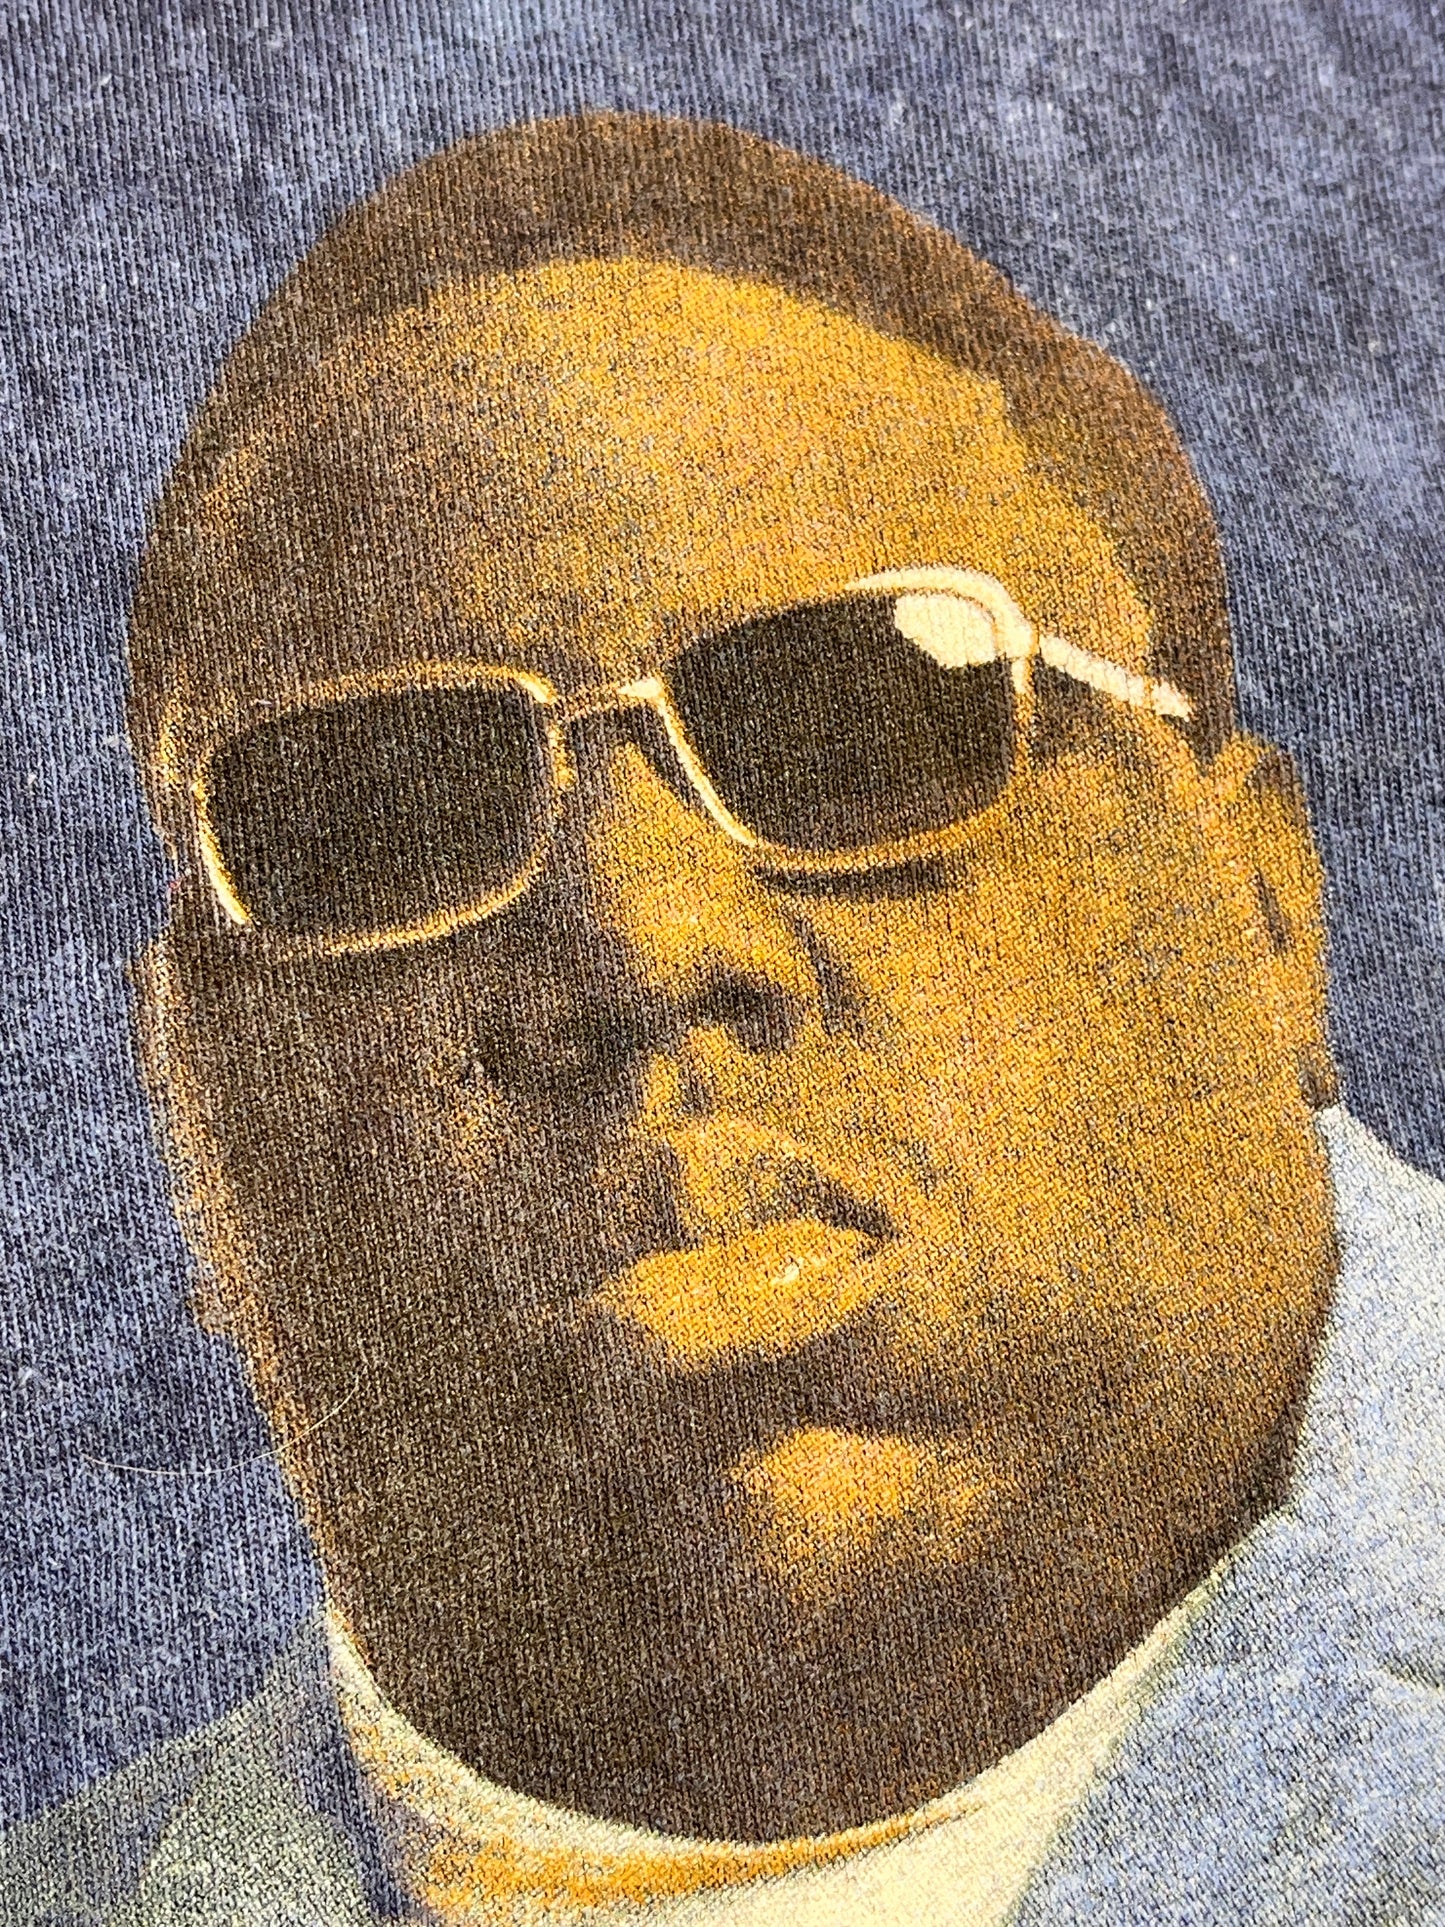 Vintage Biggie Smalls T-Shirt Rap Tee Notorious B.I.G.